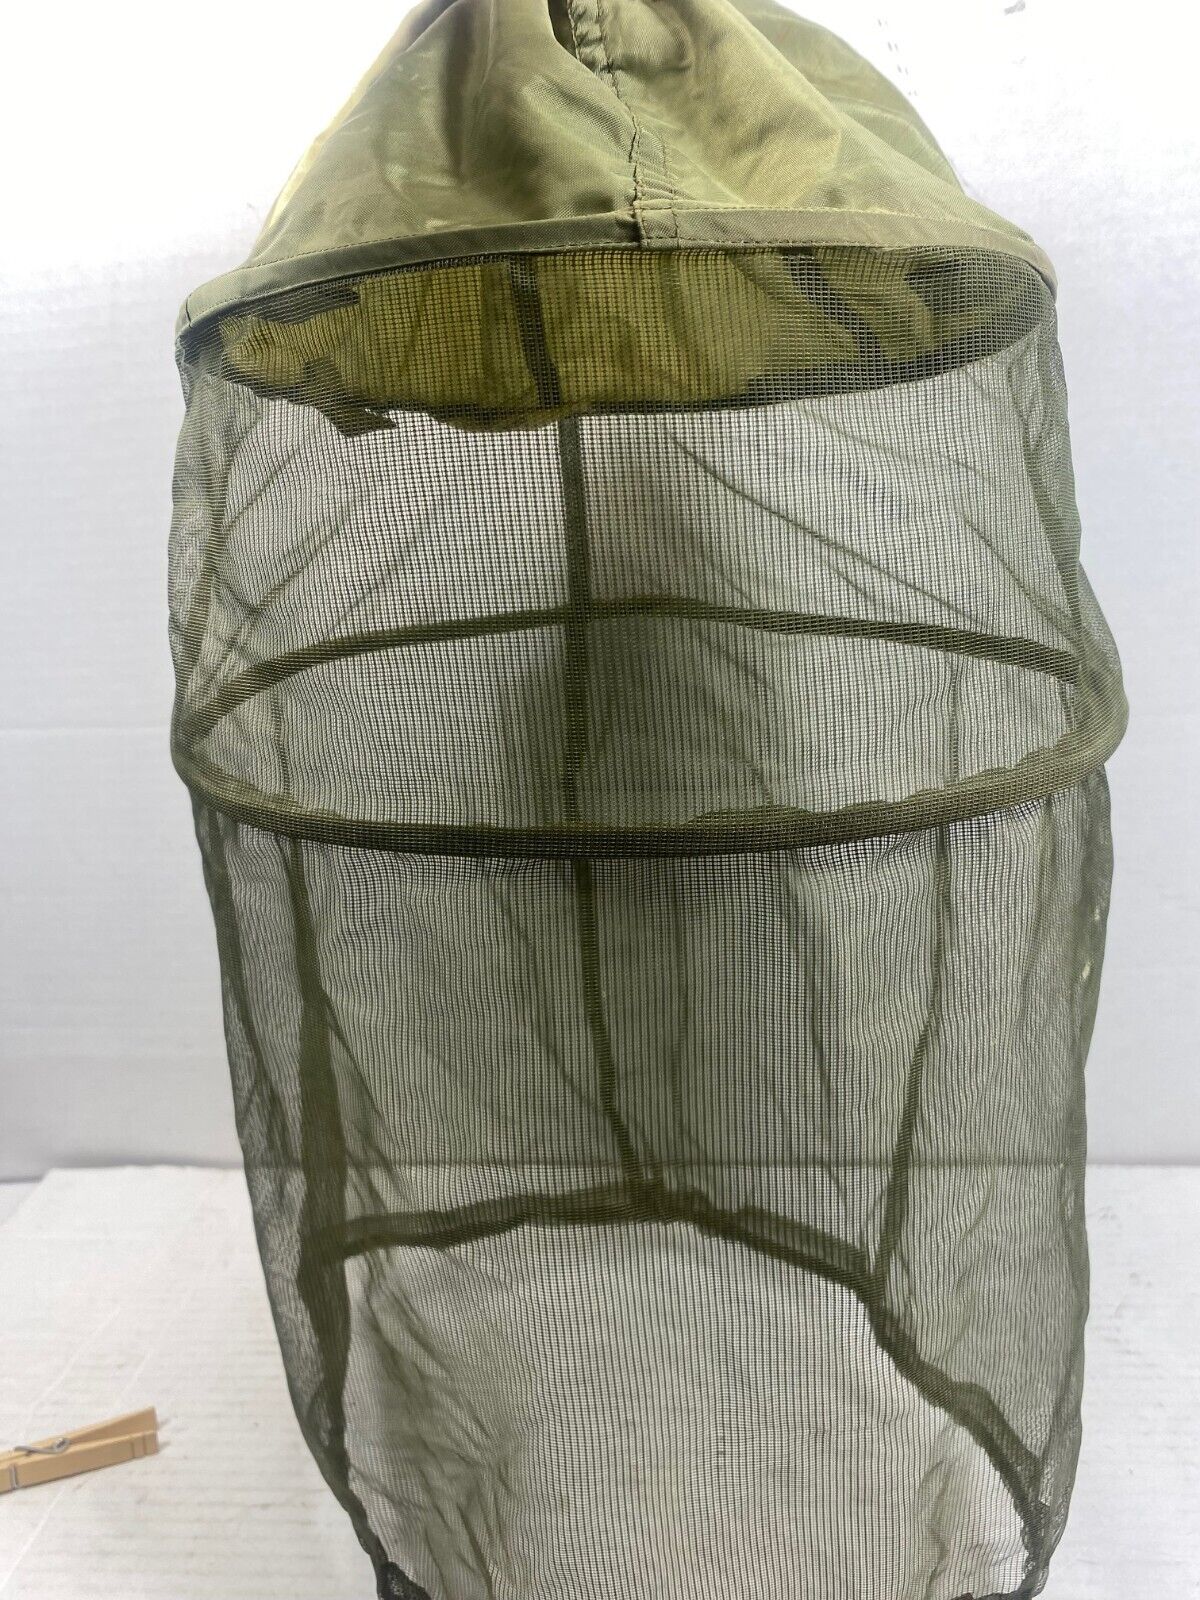 Vietnam War Mosquito Head Net, used 63' date